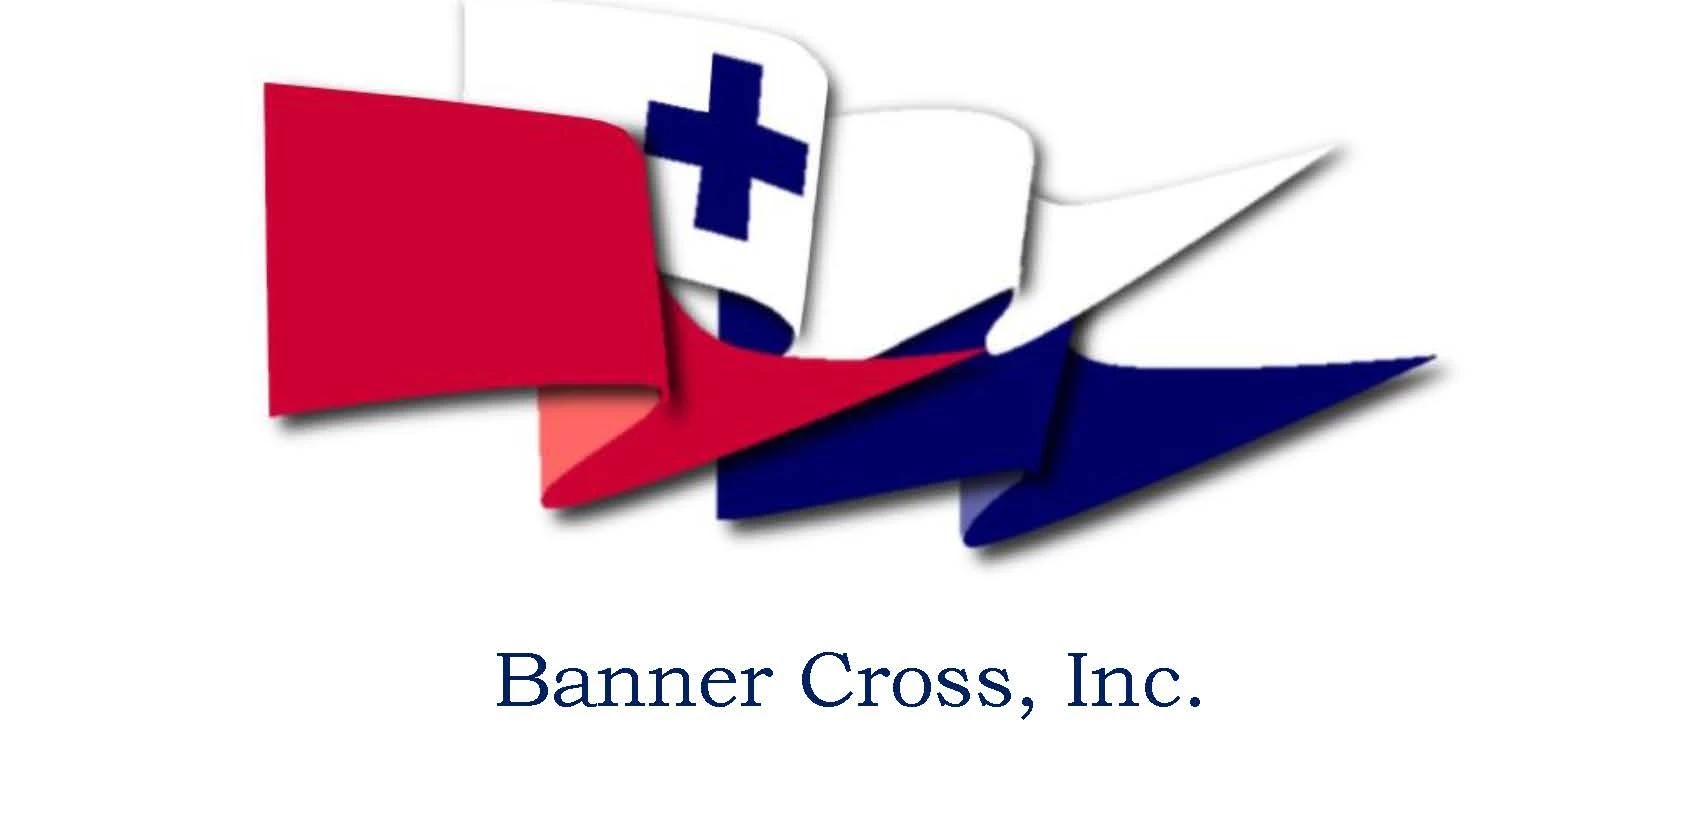 360-03841700831514-banner-cross-hi-res-logo-with-name.jpg